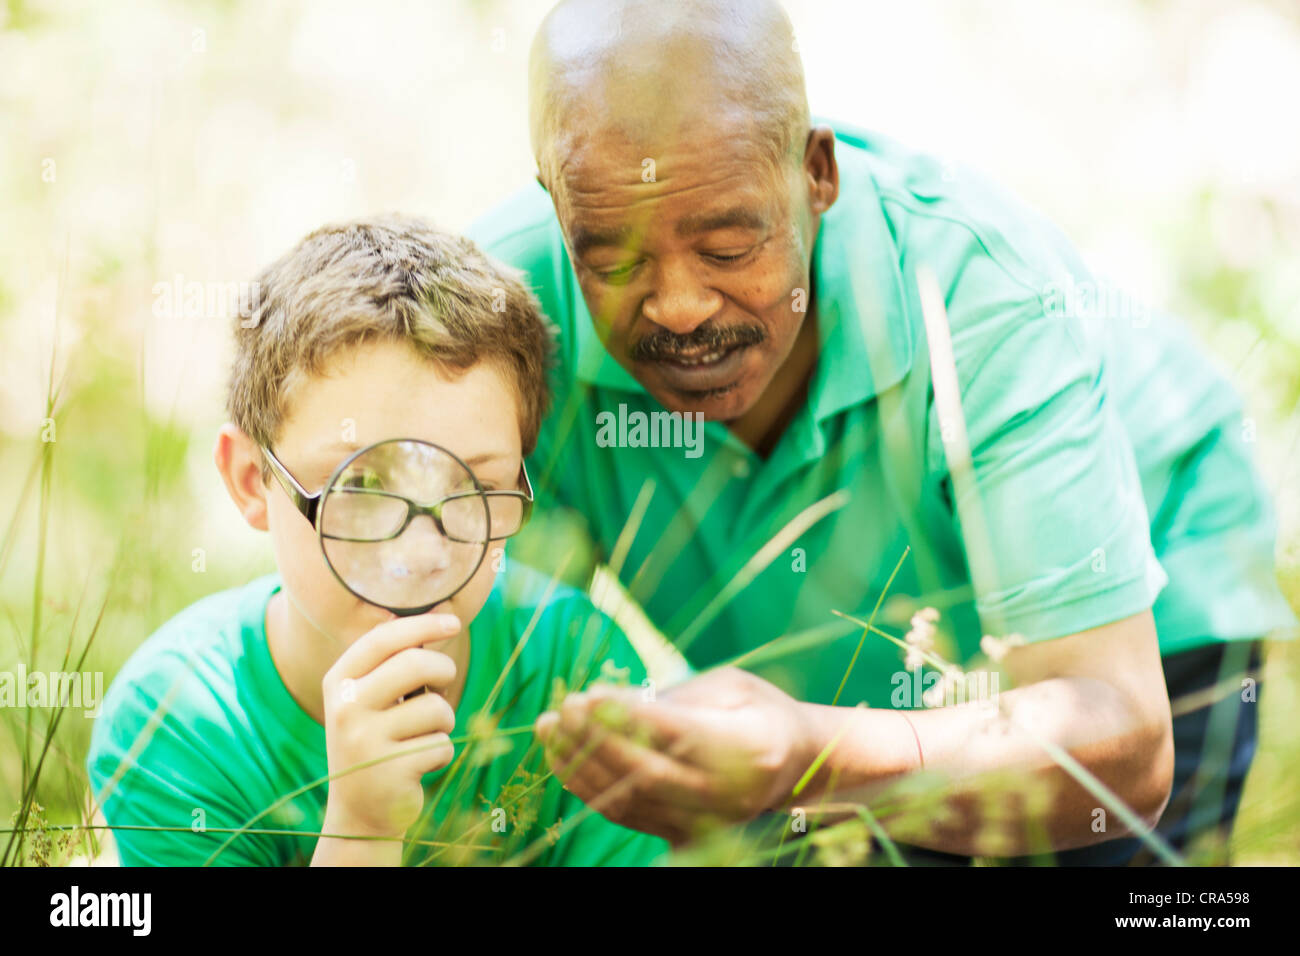 Student examining plants with teacher Stock Photo